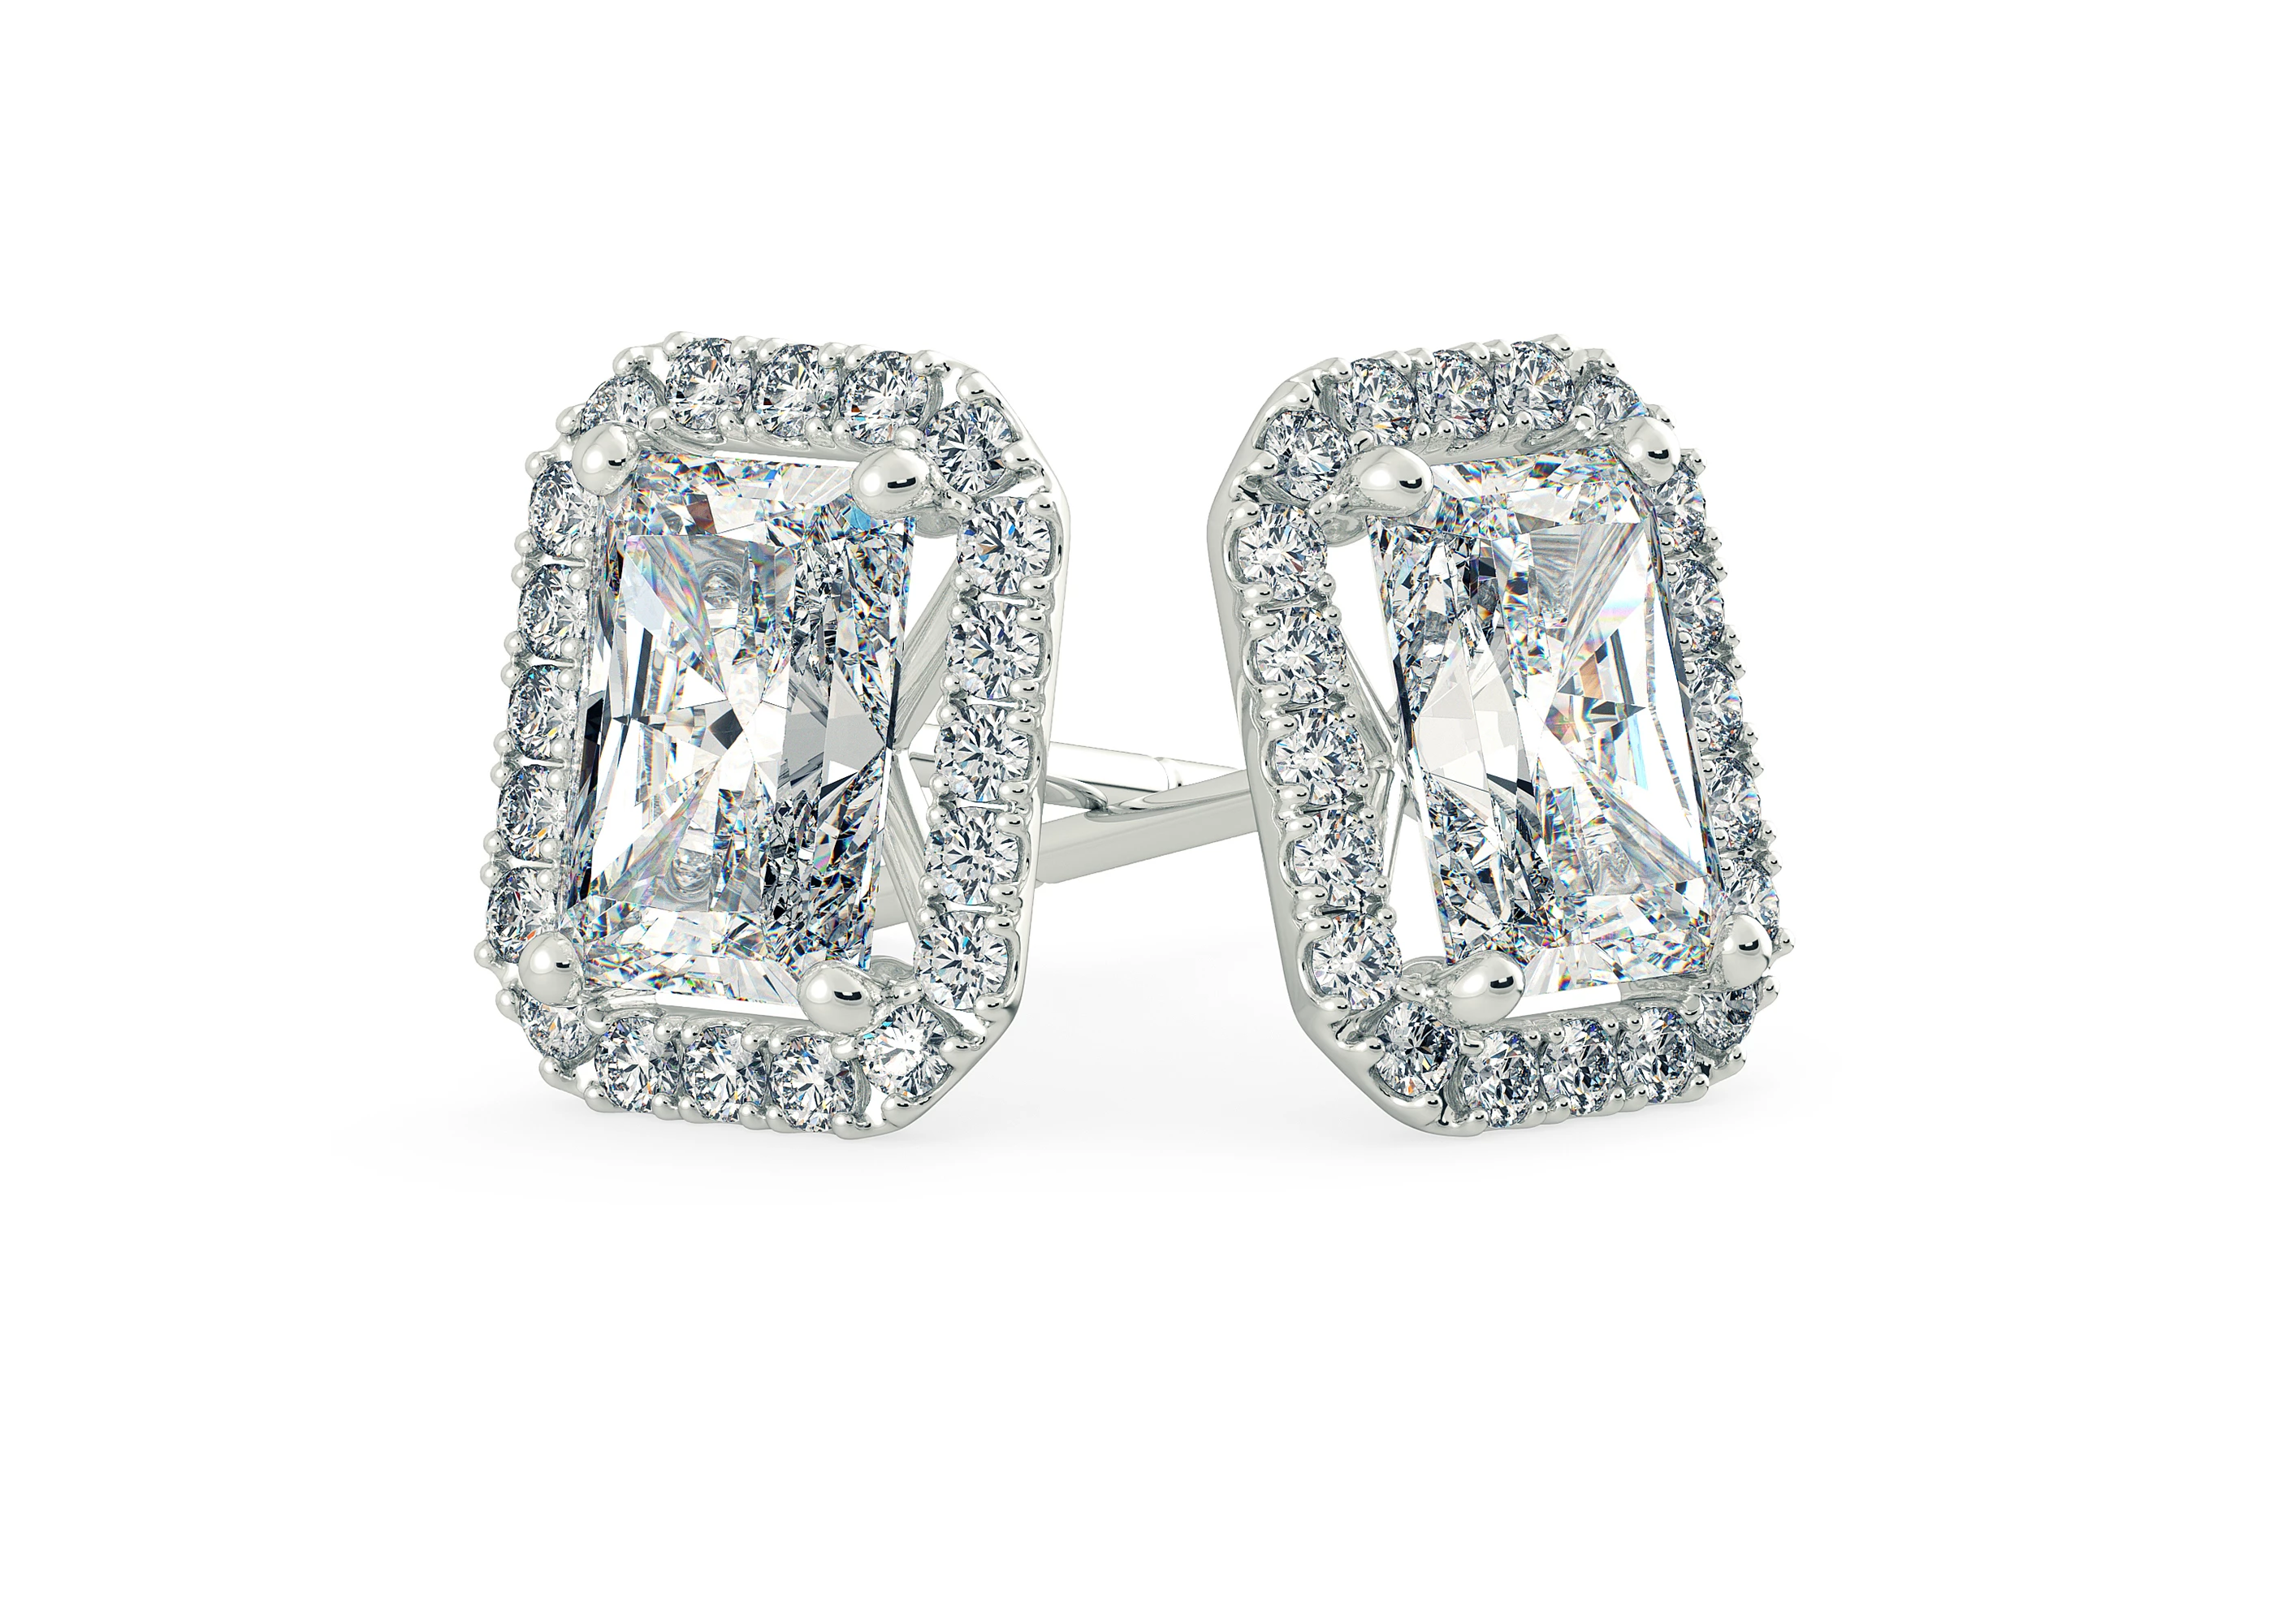 Bijou Emerald Diamond Stud Earrings in Platinum with Butterfly Backs